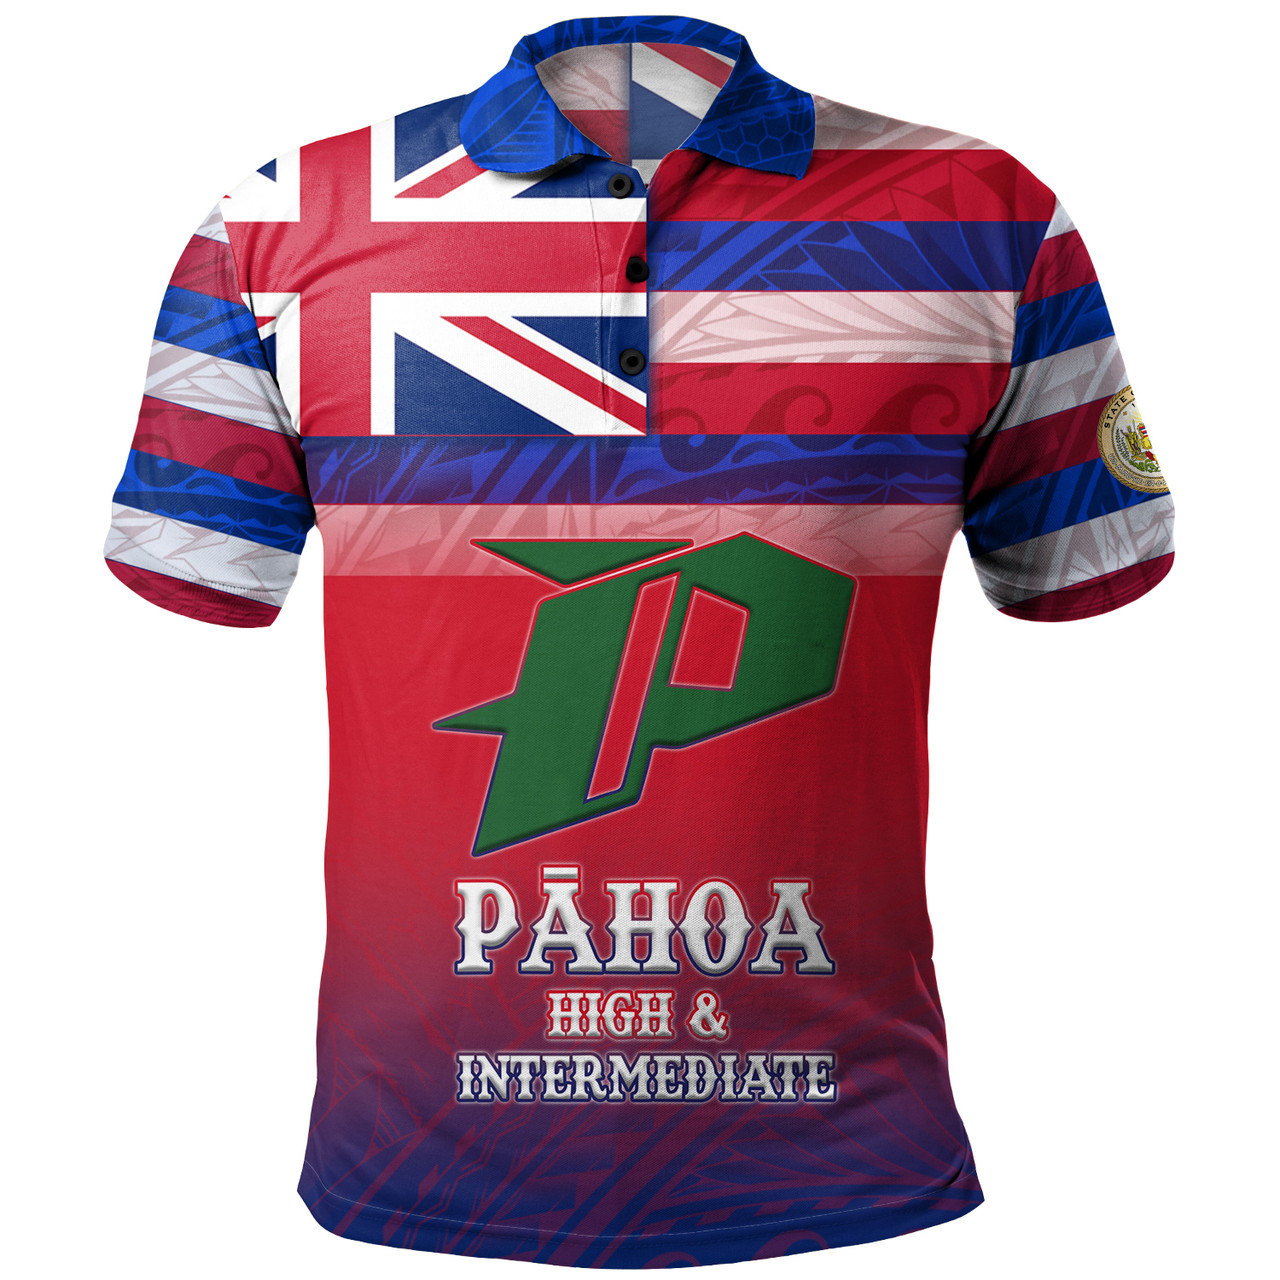 Hawaii Pāhoa High & Intermediate High School Polo Shirt Flag Color With Traditional Patterns